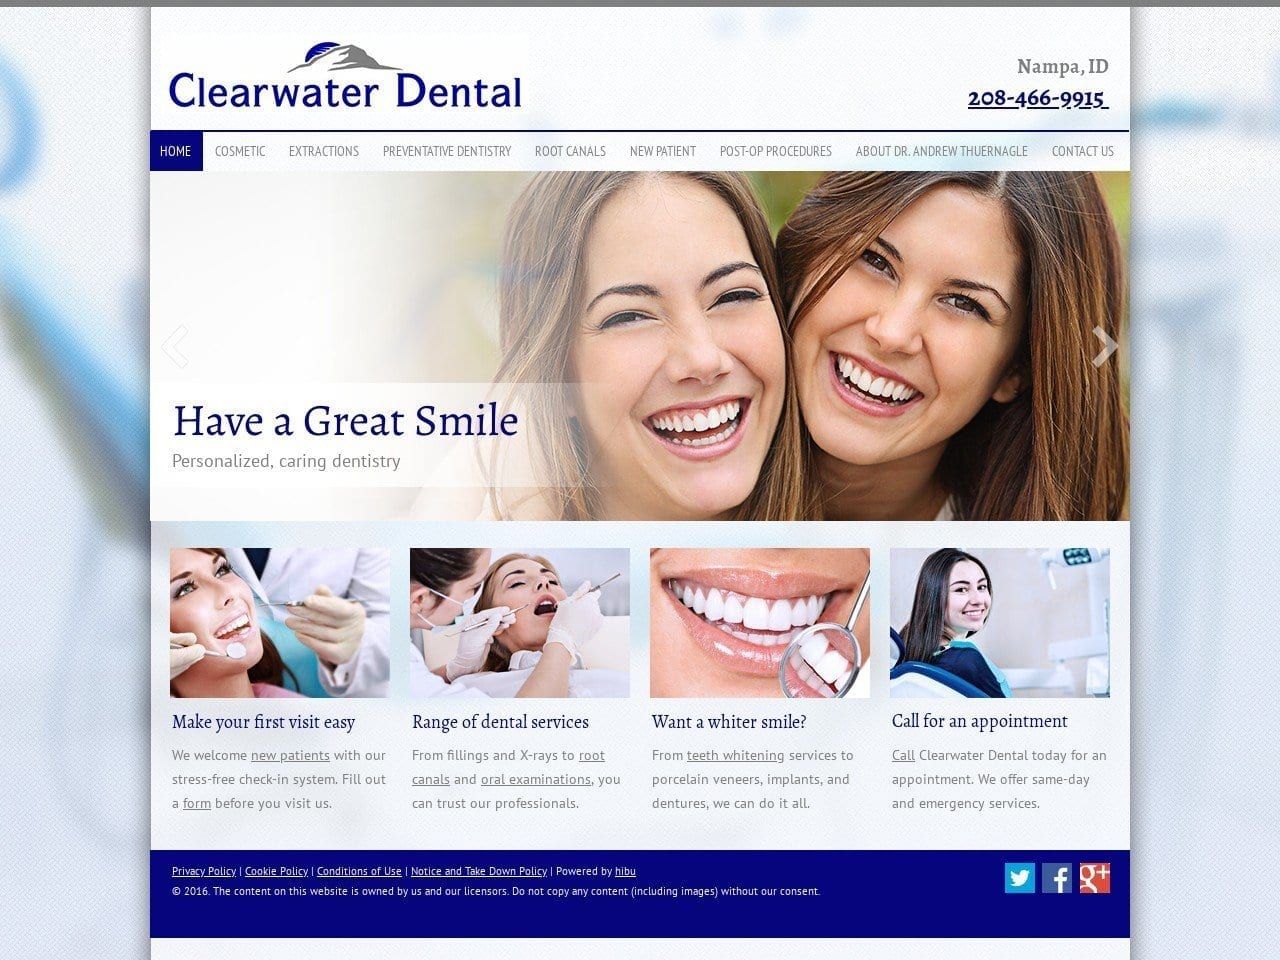 Clearwater Dental Website Screenshot from clearwaterdentalnampa.com